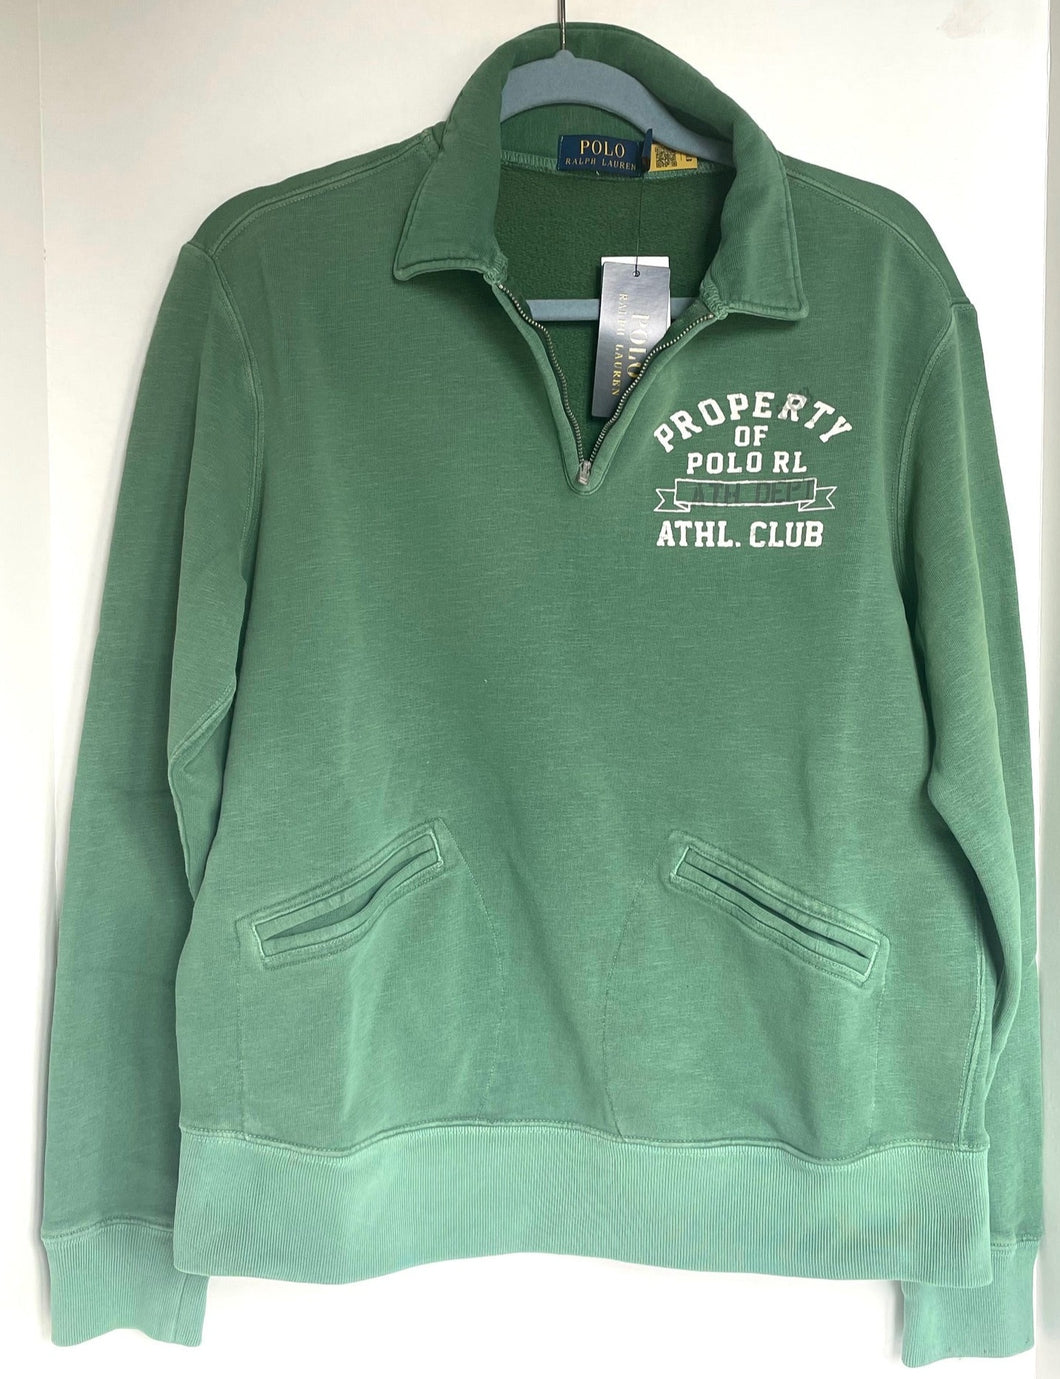 Polo Ralph Lauren Sweatshirt Mens Green Quarter Zip Vintage Athletic Club Jumper